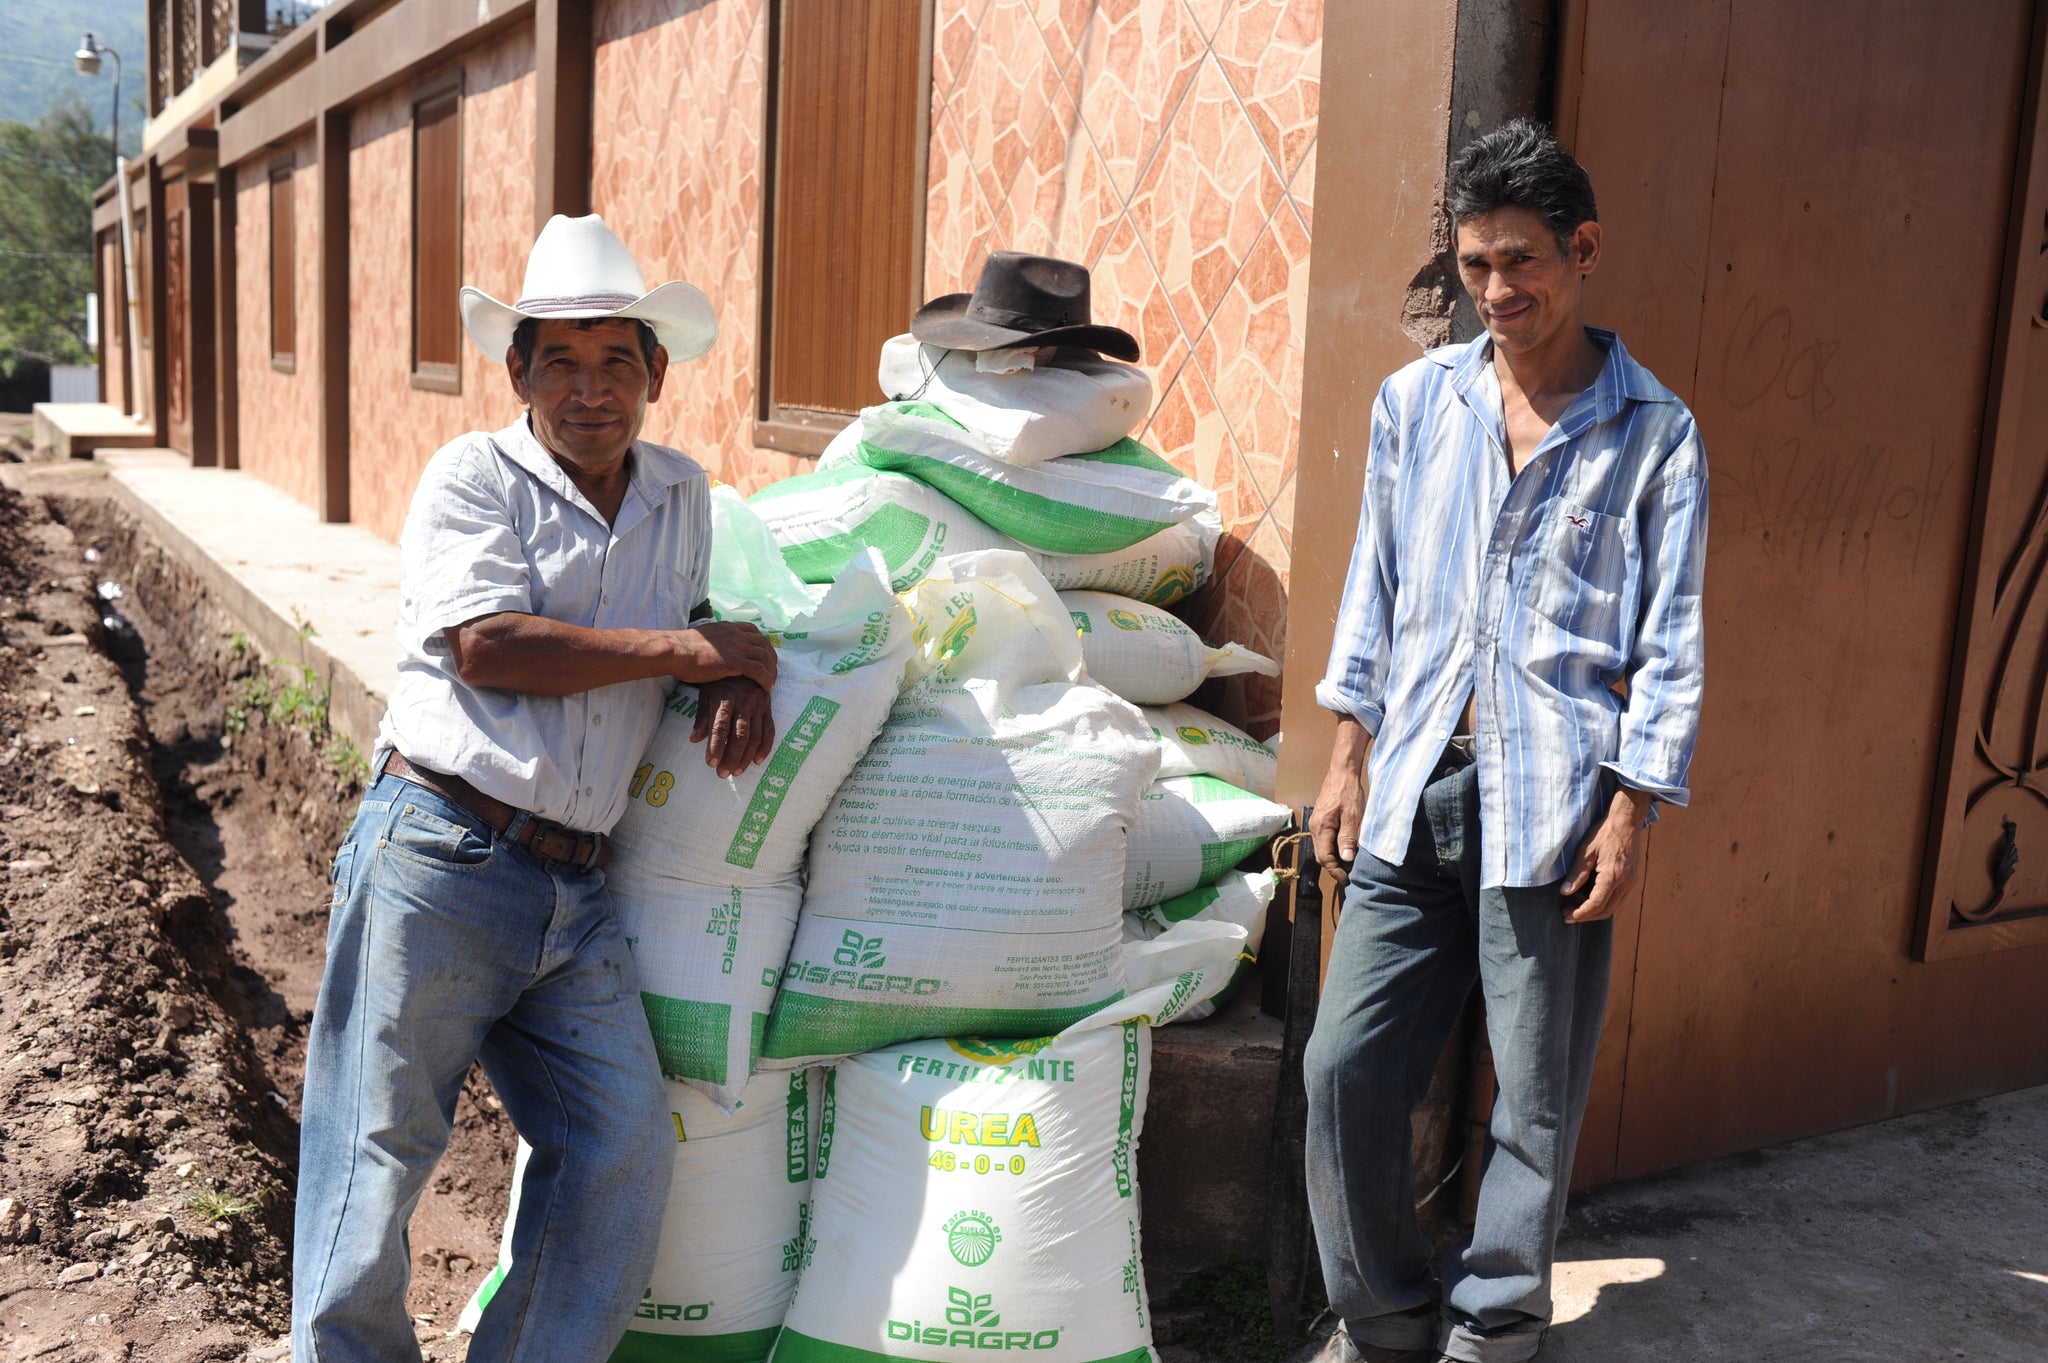 Aldea Development fertilizer microloan to coffee, corn & bean farmers in La Union, Honduras 